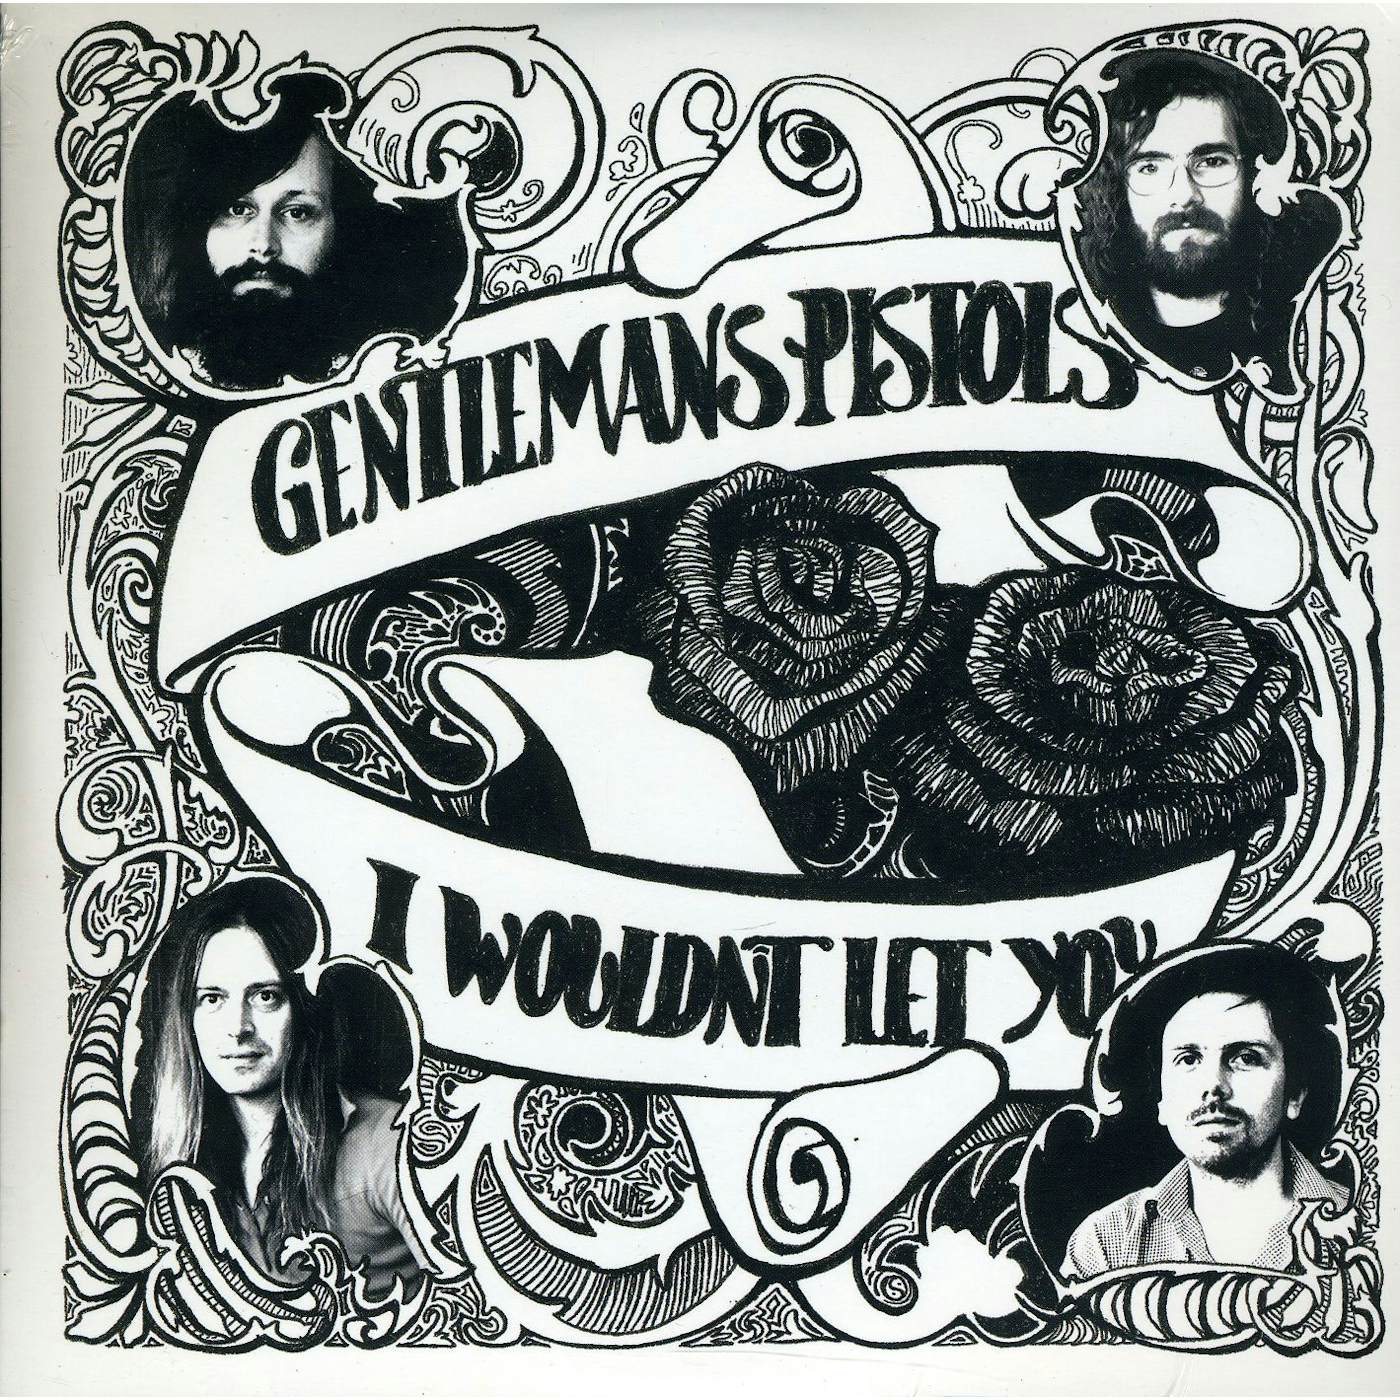 Gentleman's Pistols I Wouldn't Let You Vinyl Record